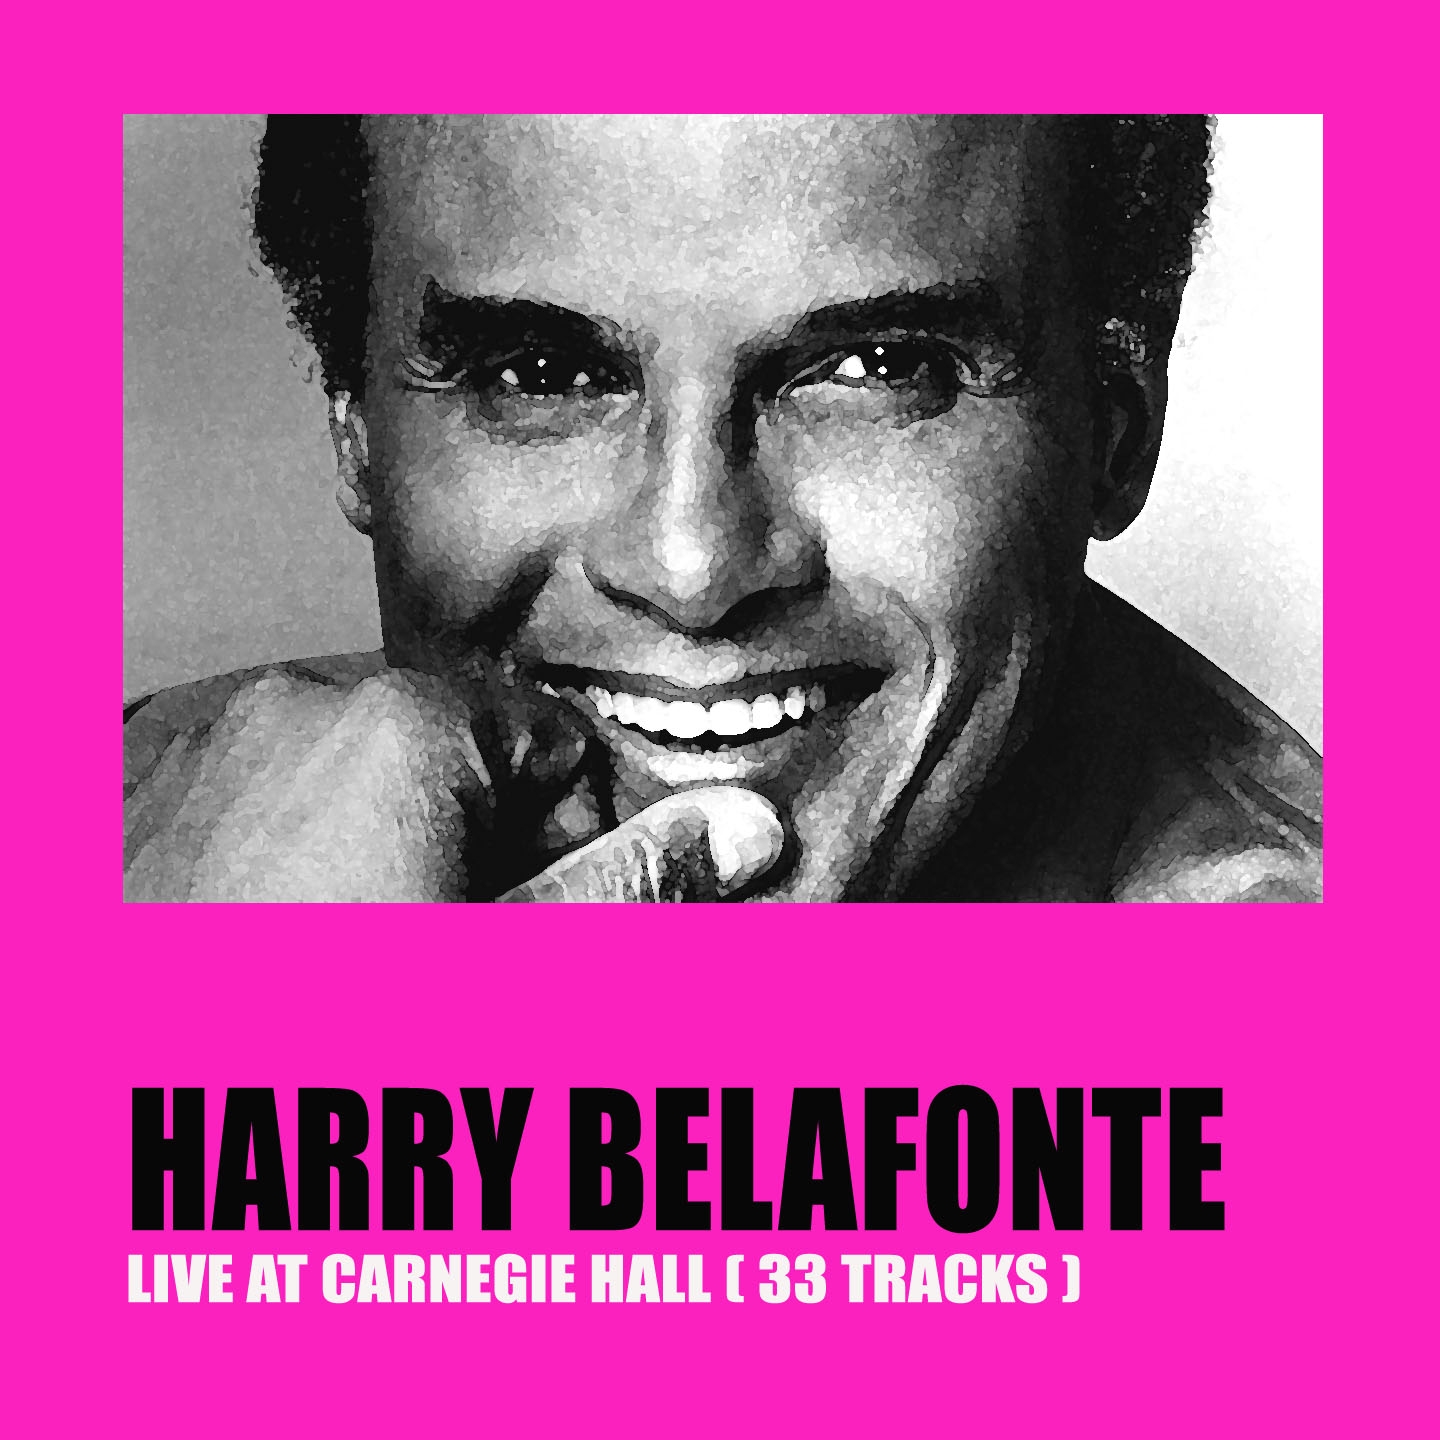 Live at Carnegie Hall (33 Tracks)